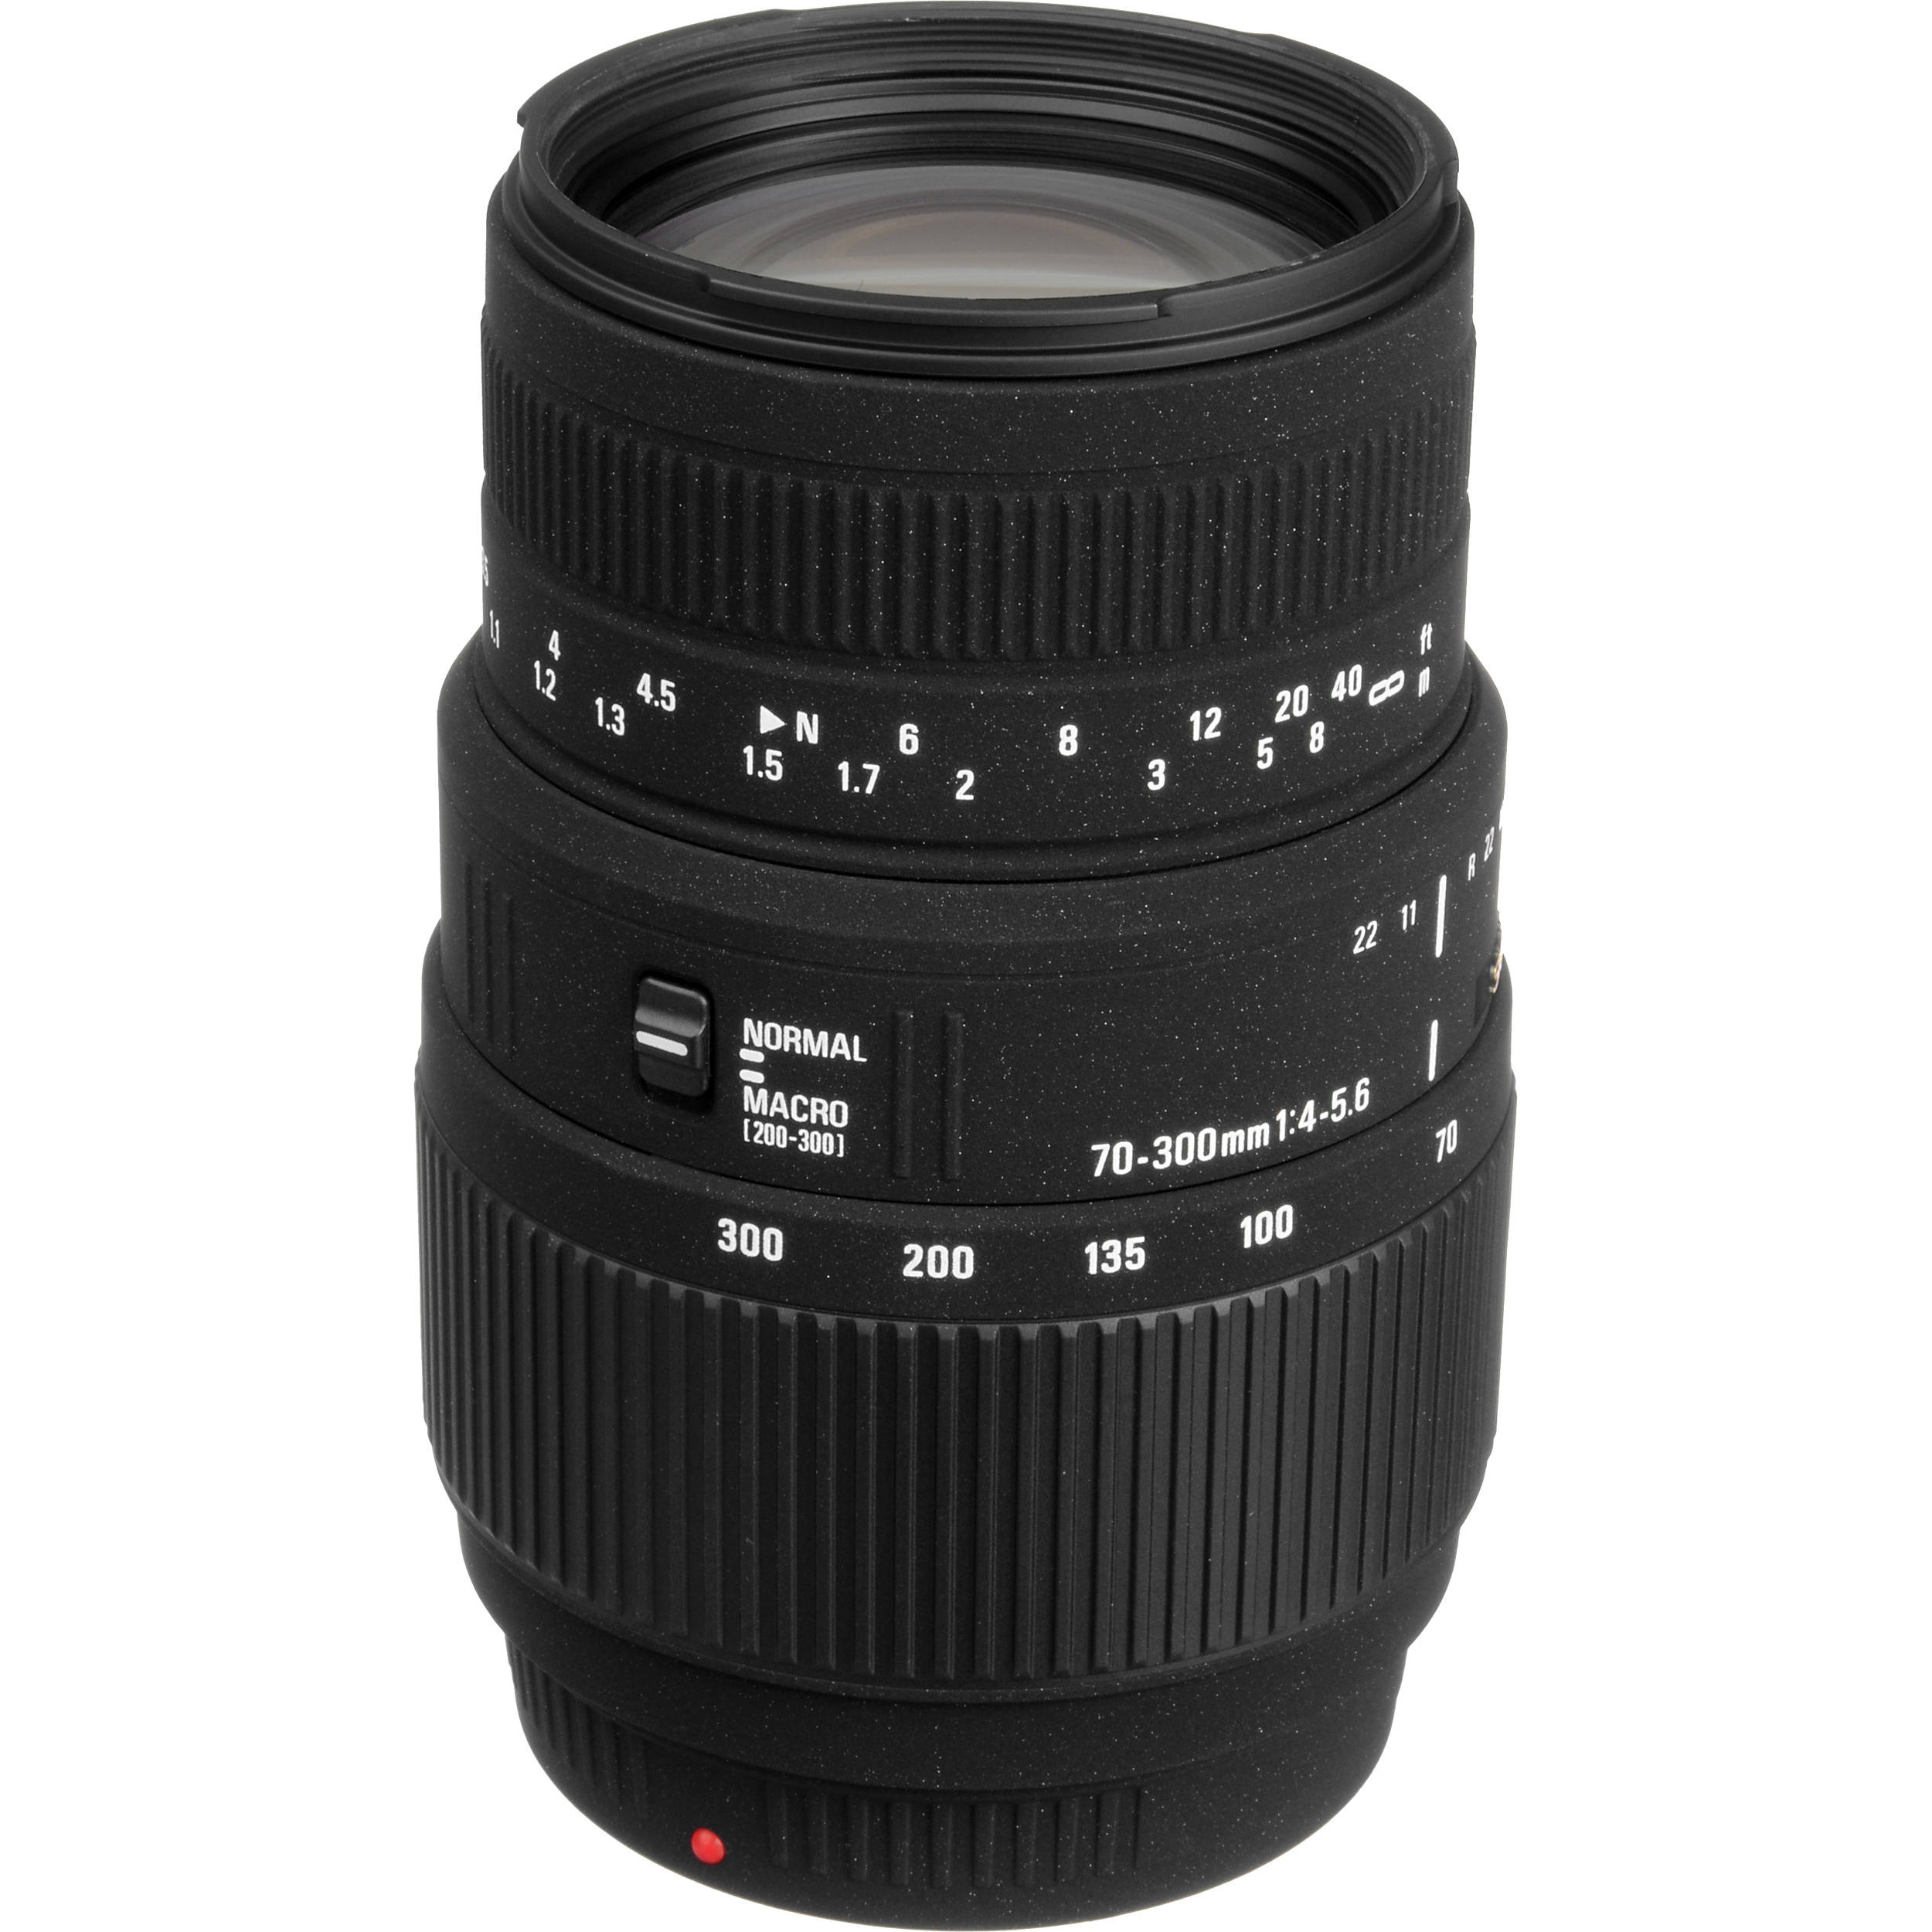 Sigma 70-300mm f/4-5.6 DG Macro Lens for Sony and Minolta Cameras